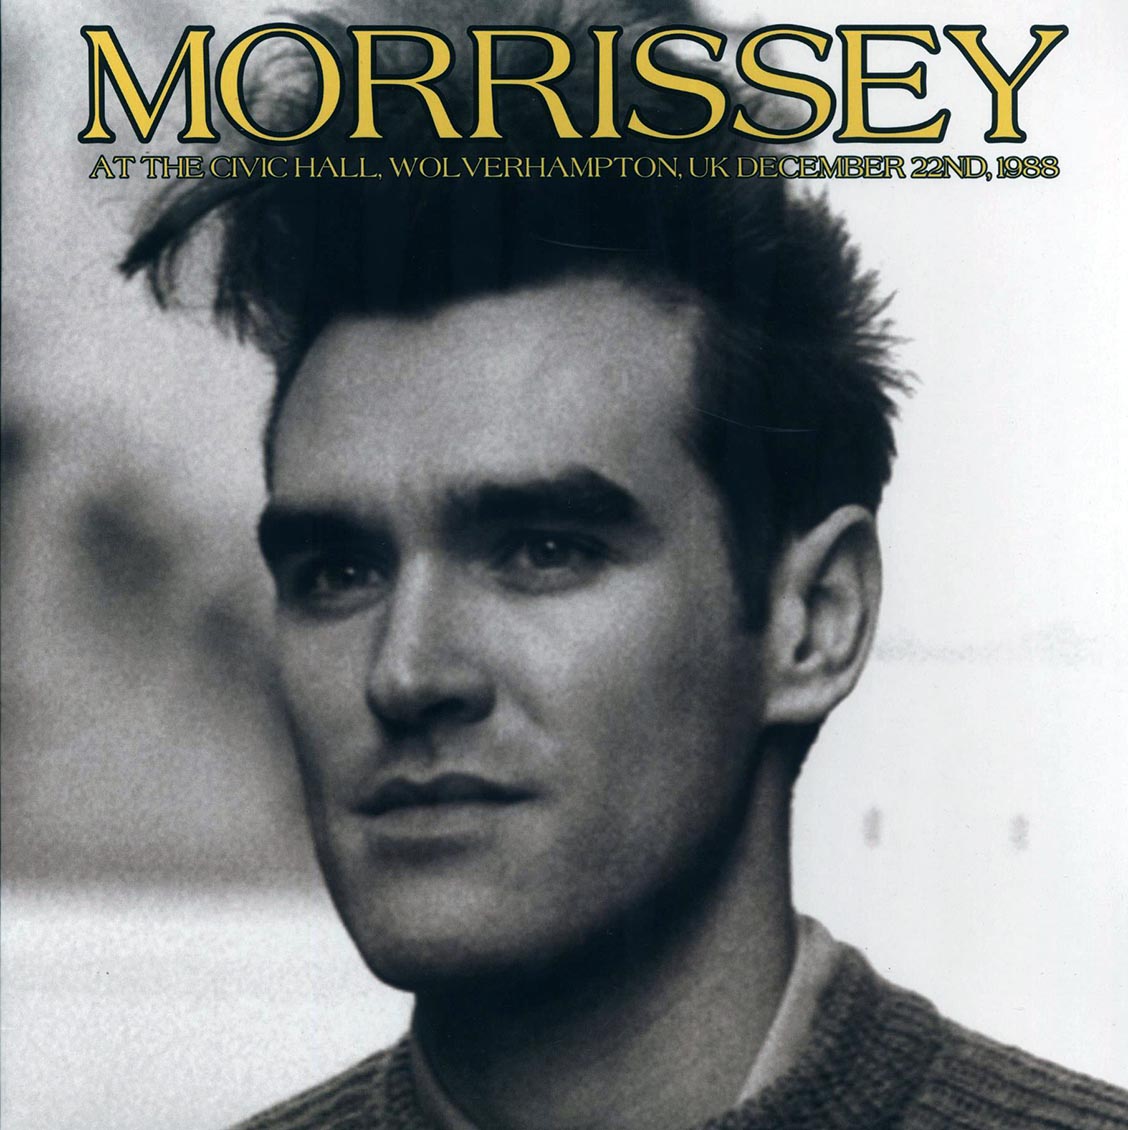 Morrissey - At The Civic Hall, Wolverhampton, UK December 22nd, 1988 (ltd. 500 copies made) (pink vinyl) - Vinyl LP